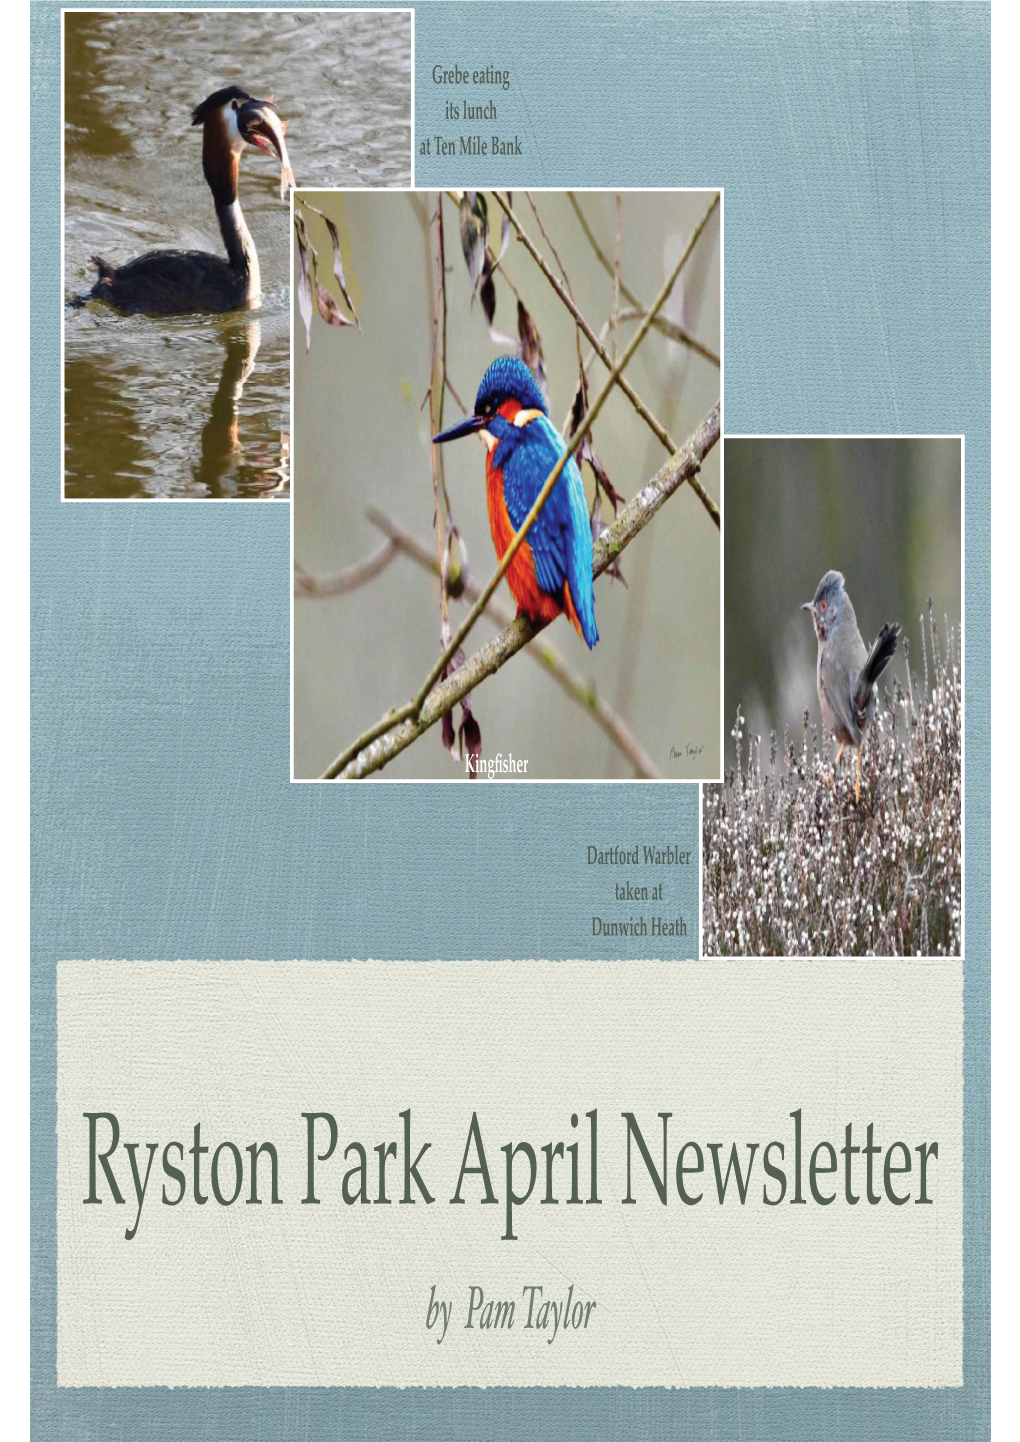 Ryston Park April Newsletter by Pam Taylor '!!7